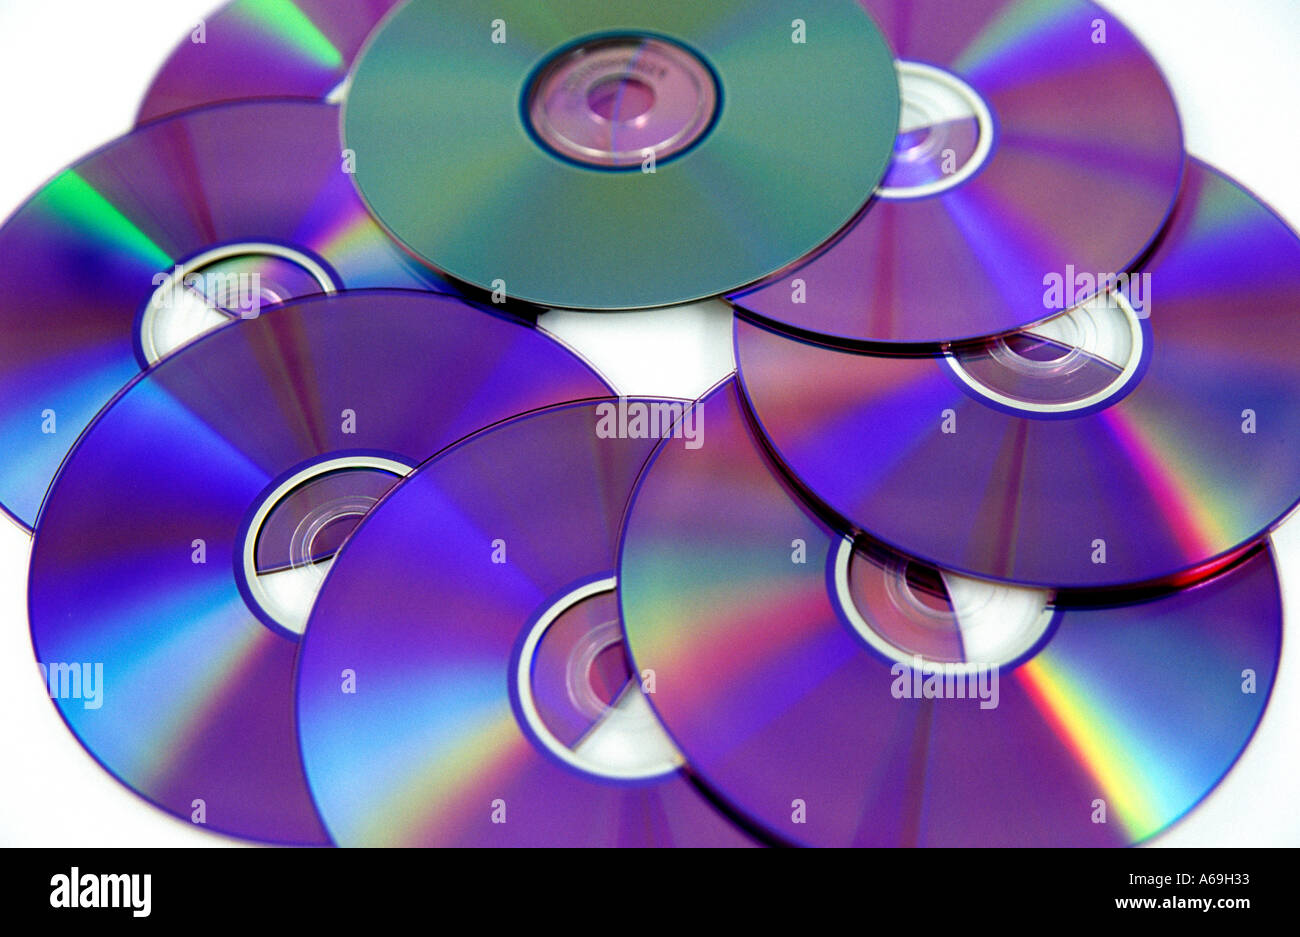 CD DVD Disks Disc Compact Disc Digital Versatile Disk Stock Photo - Alamy